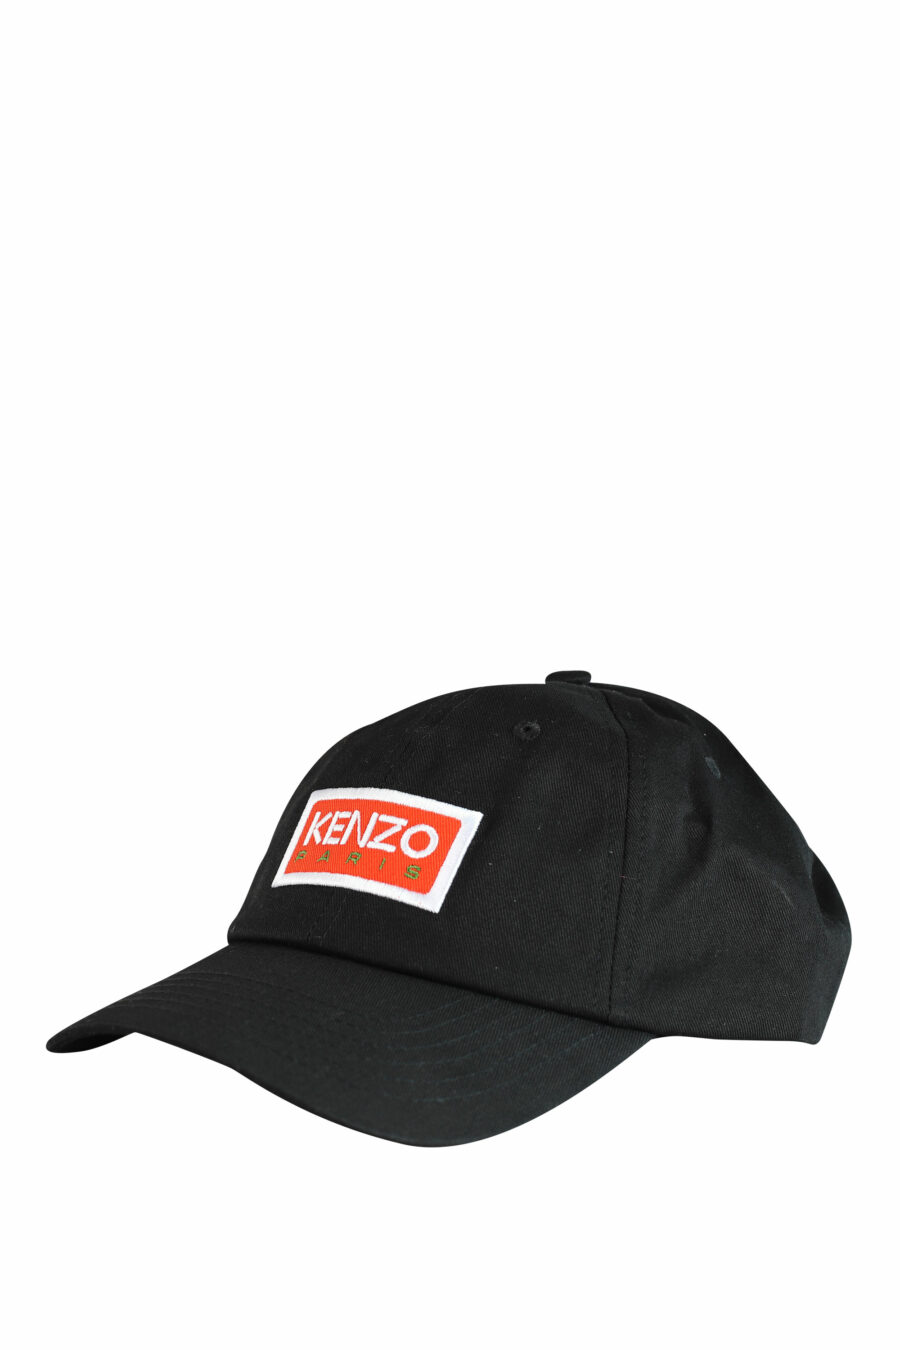 Gorra negra con logo "paris" - IMG 1051